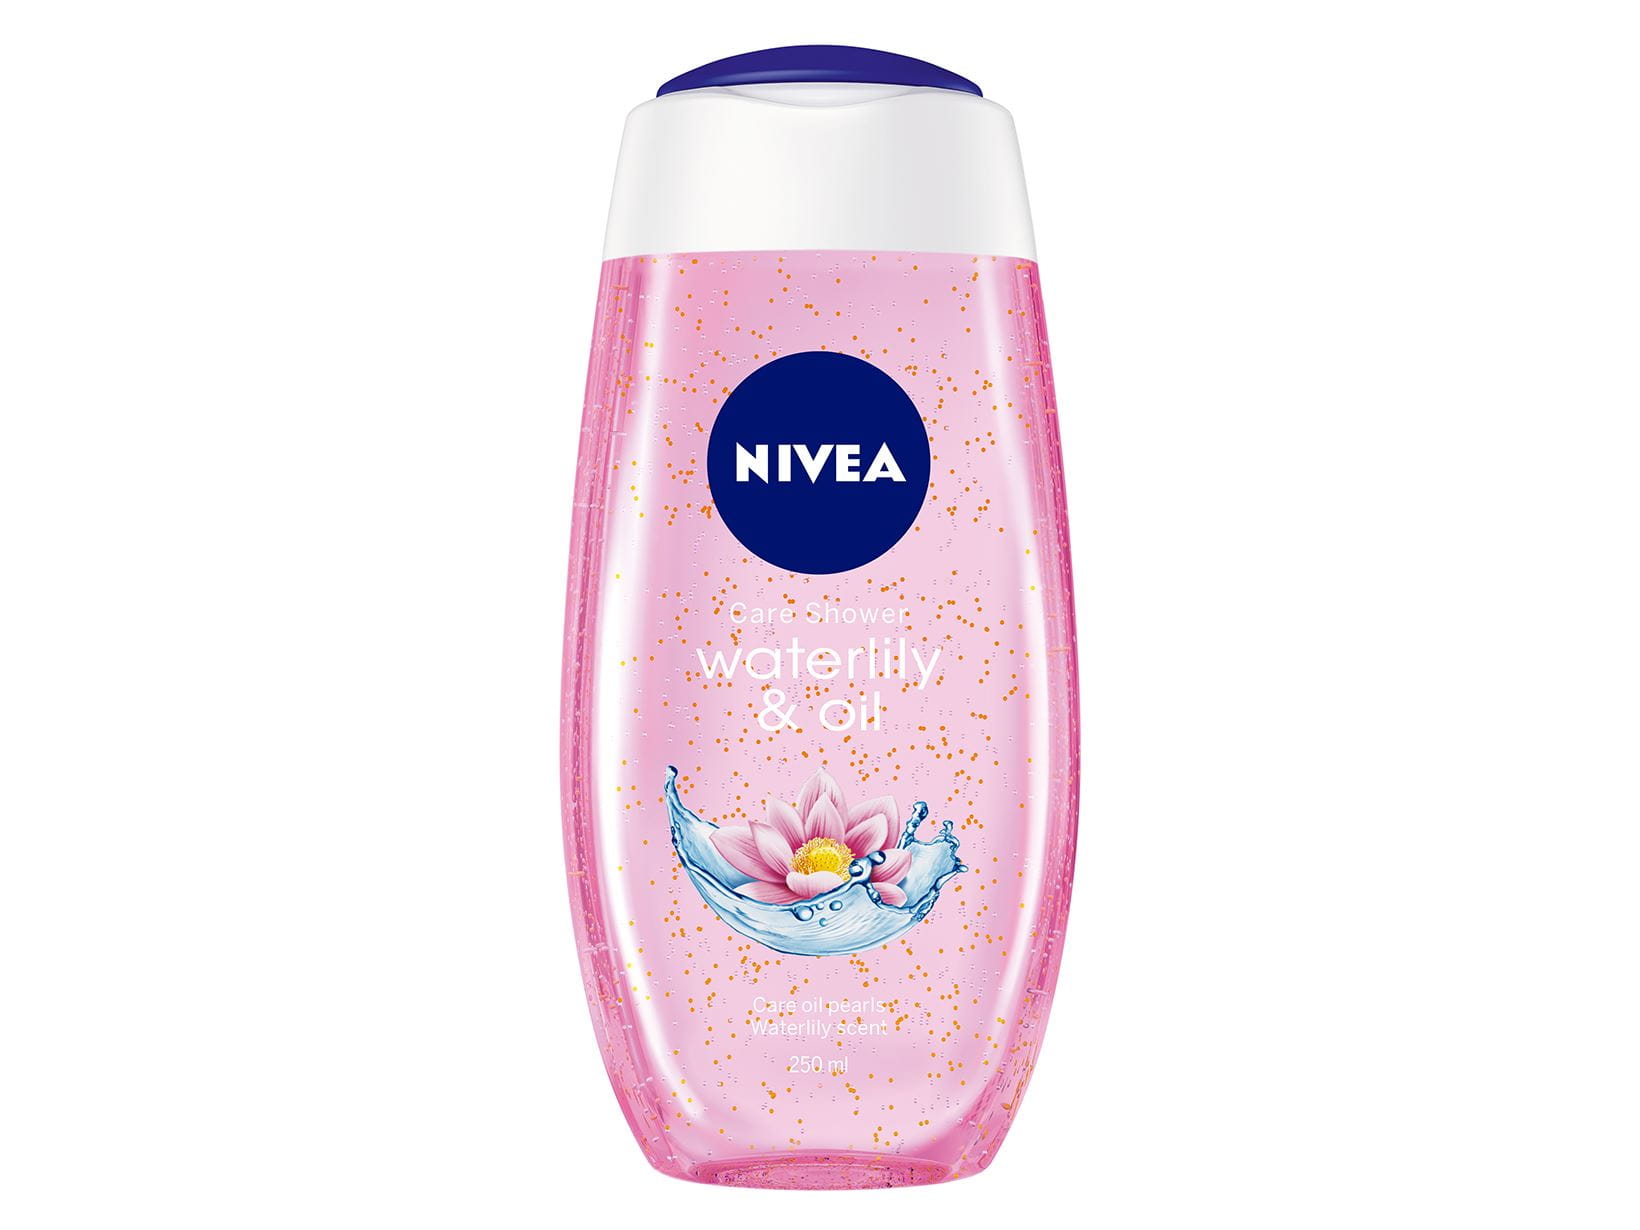 NIVEA Care & Sparkle Moisturizing Body Wash